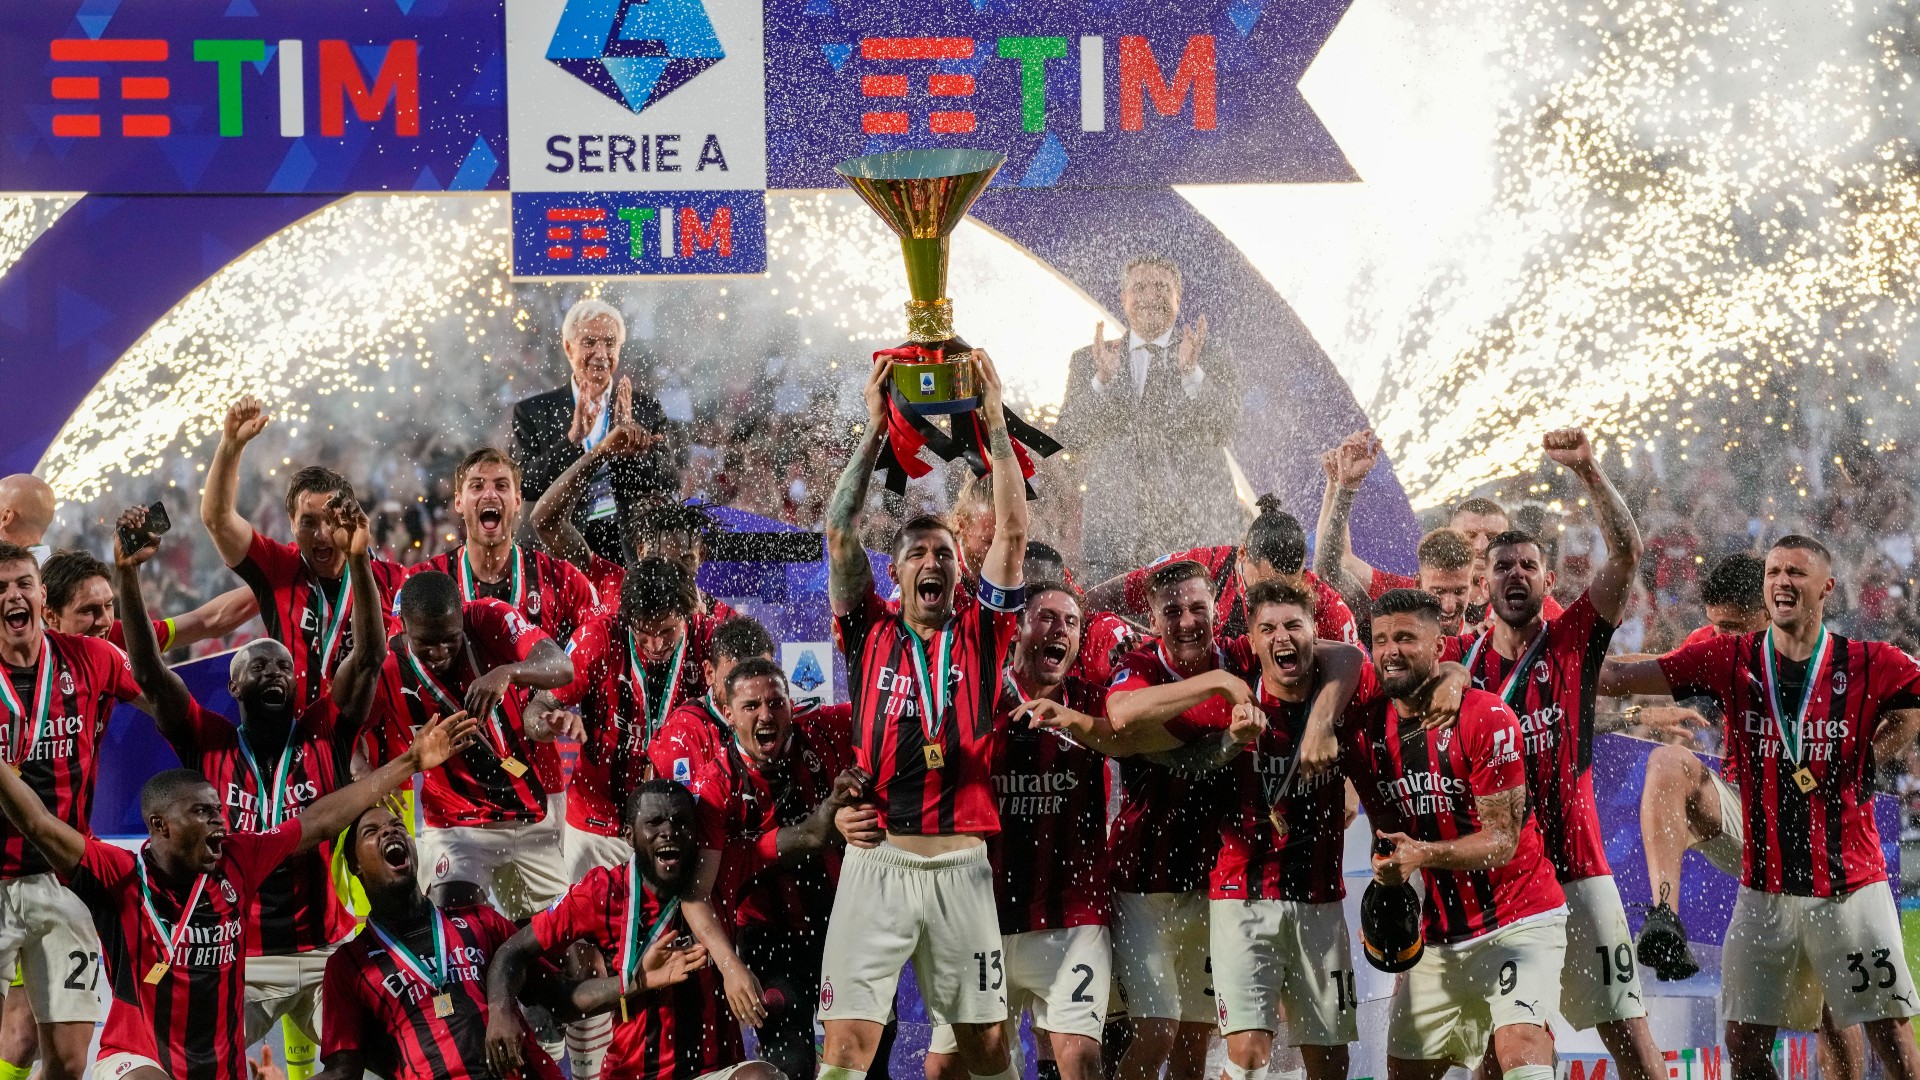 AC Milan - AC Milan added a new photo.